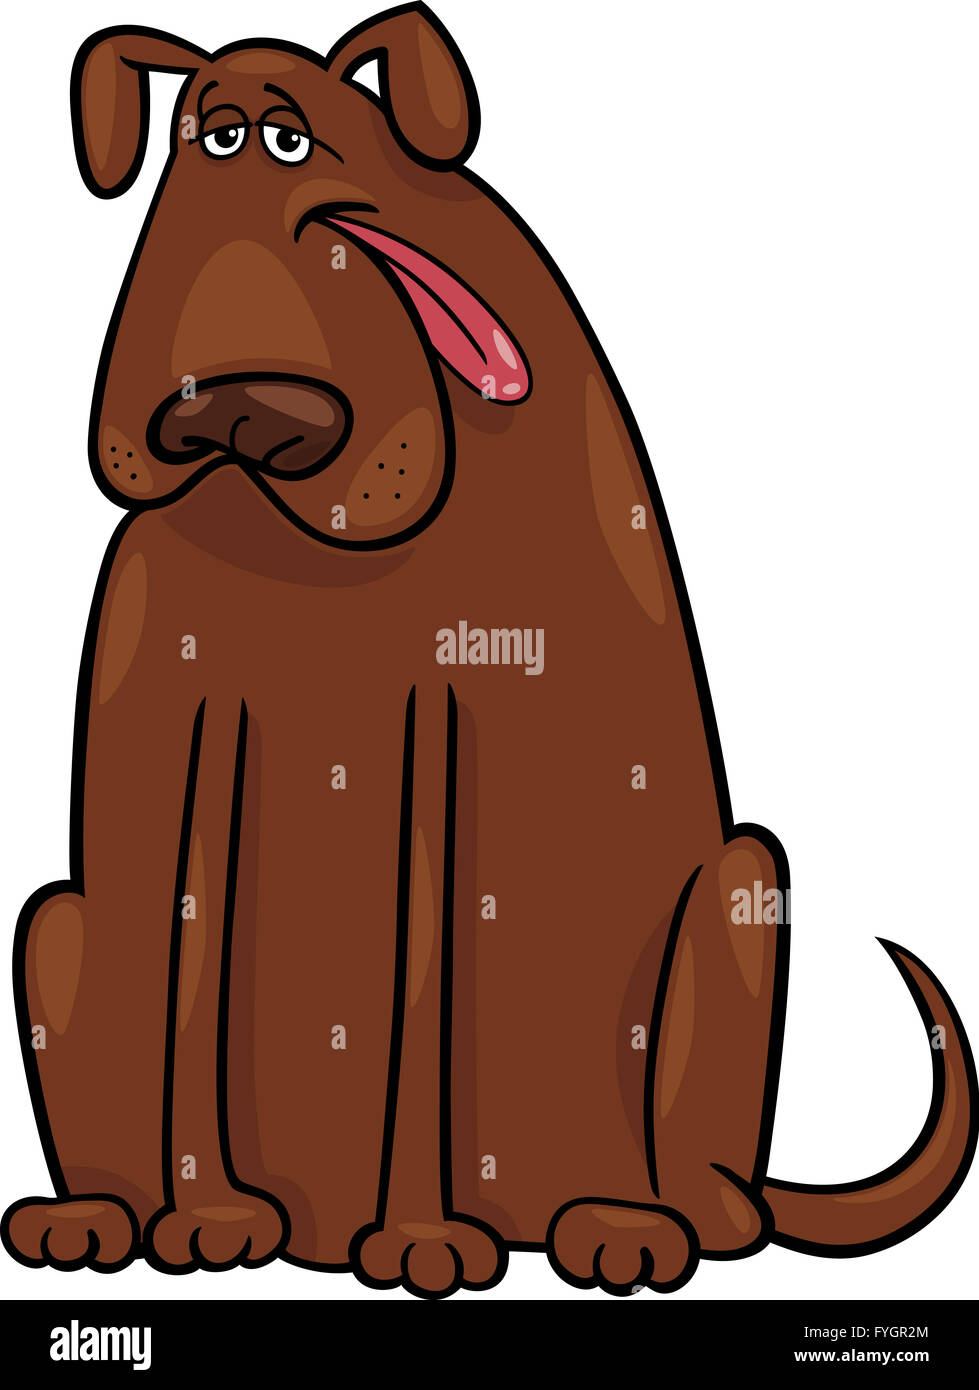 brown big dog cartoon illustration Stock Photo